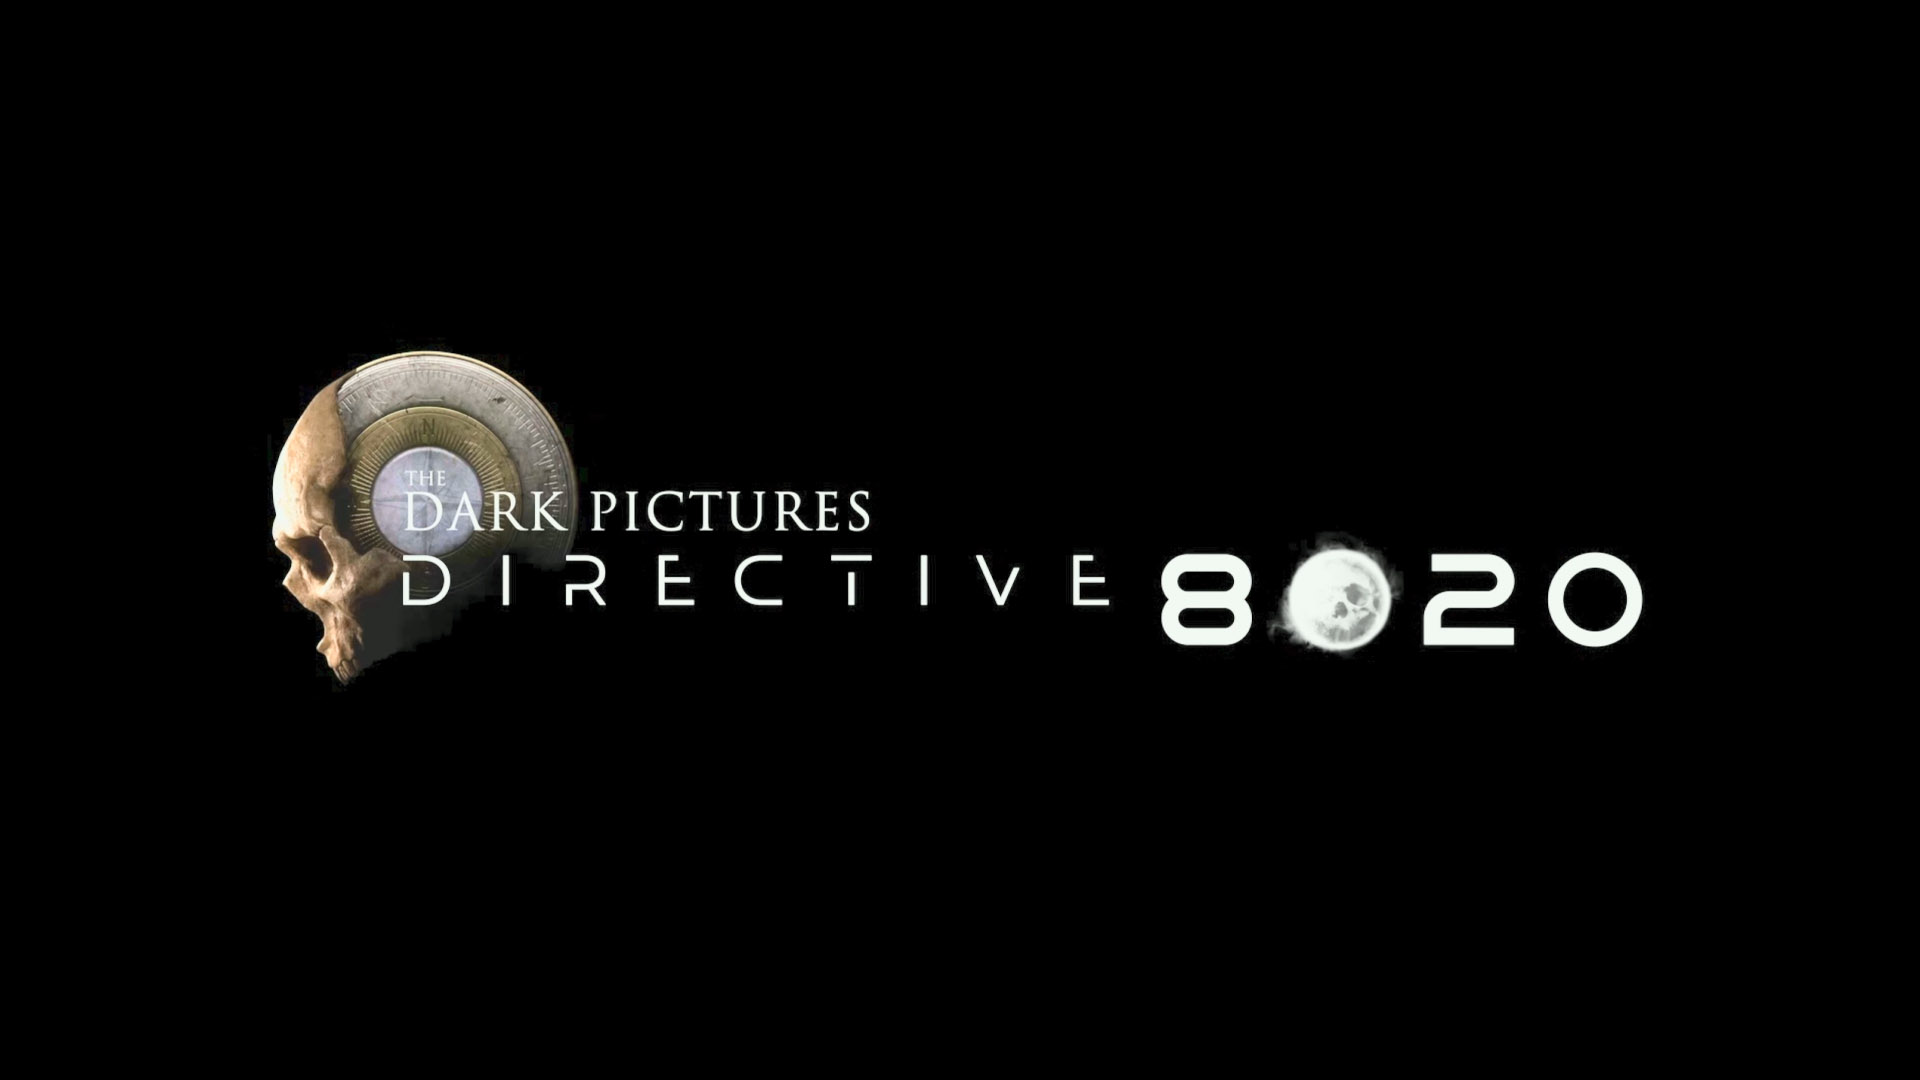 The Dark Pictures Anthology: Directive 8020 Teaser